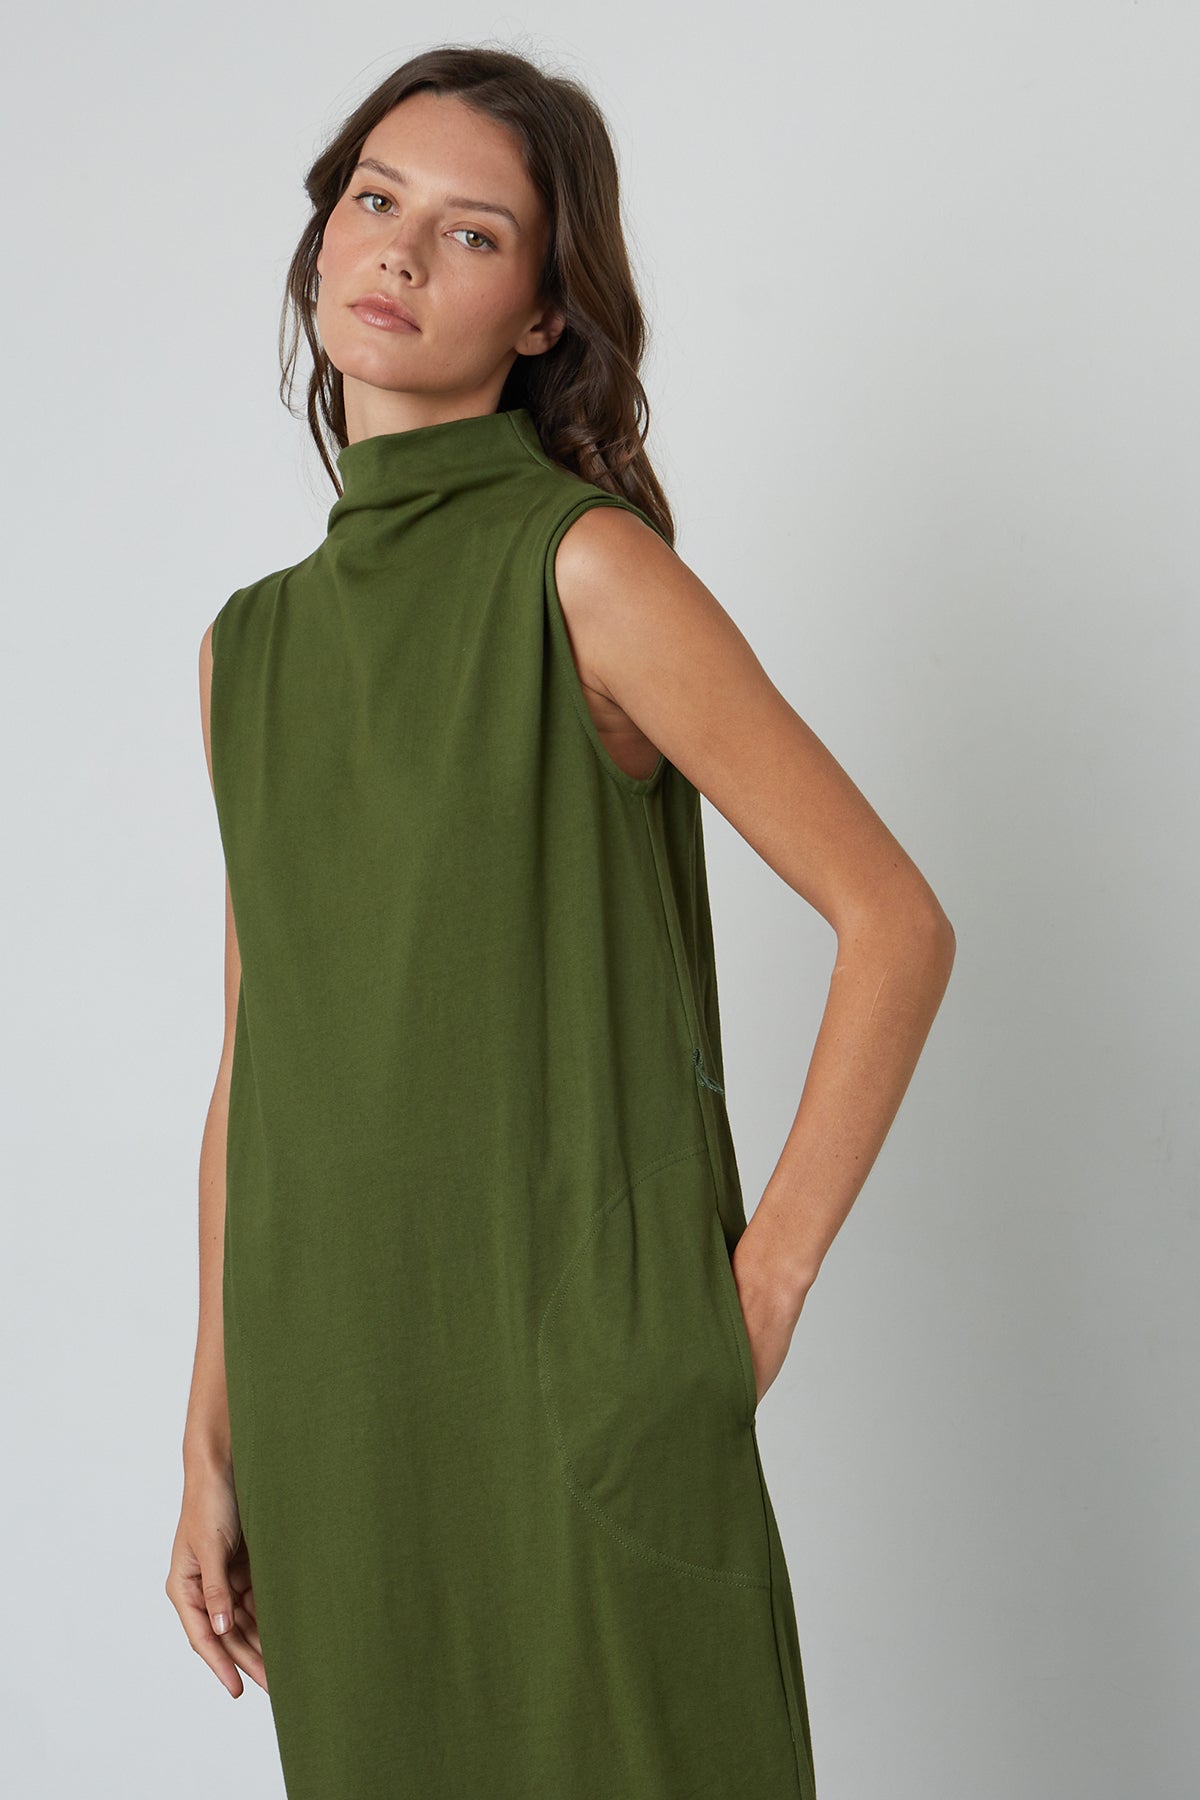   The model is wearing a green Velvet by Graham & Spencer Hydie Mock Neck Dress. 